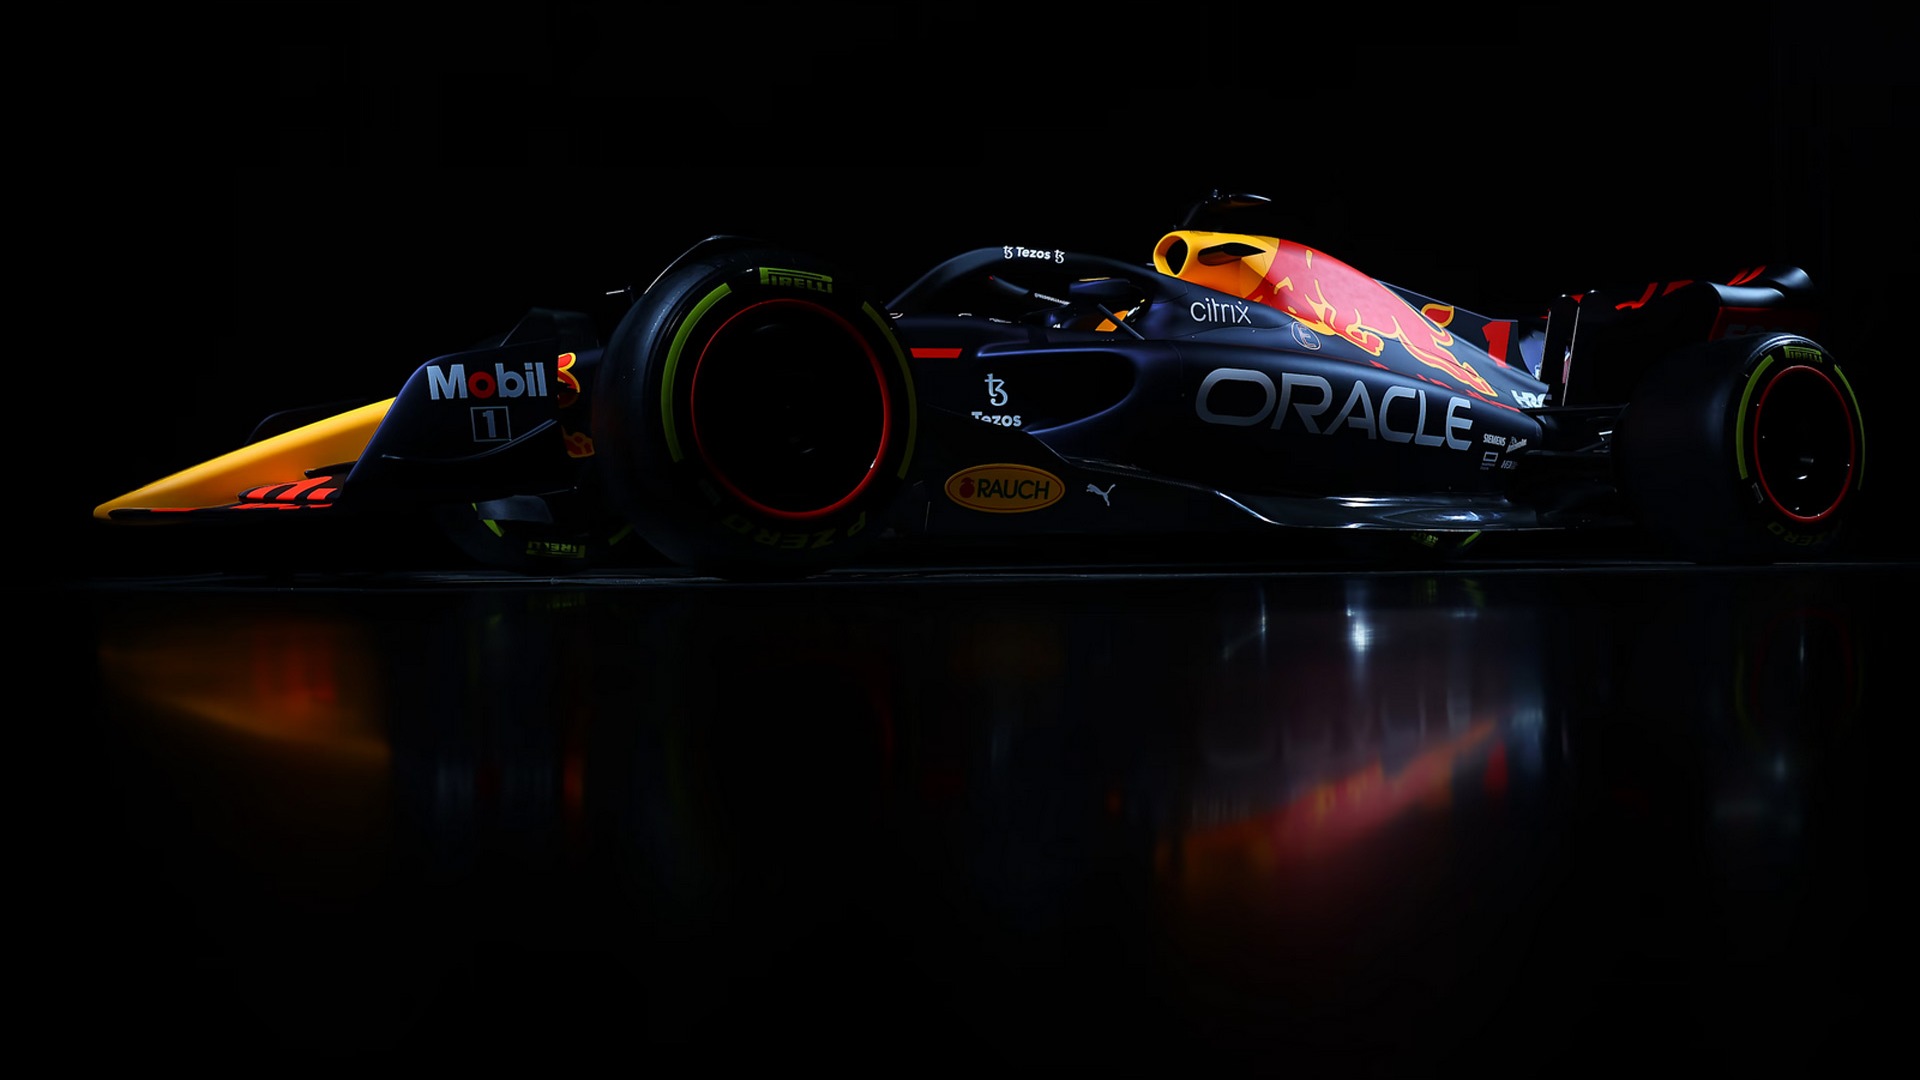 Red Bull F1 Car Wallpapers